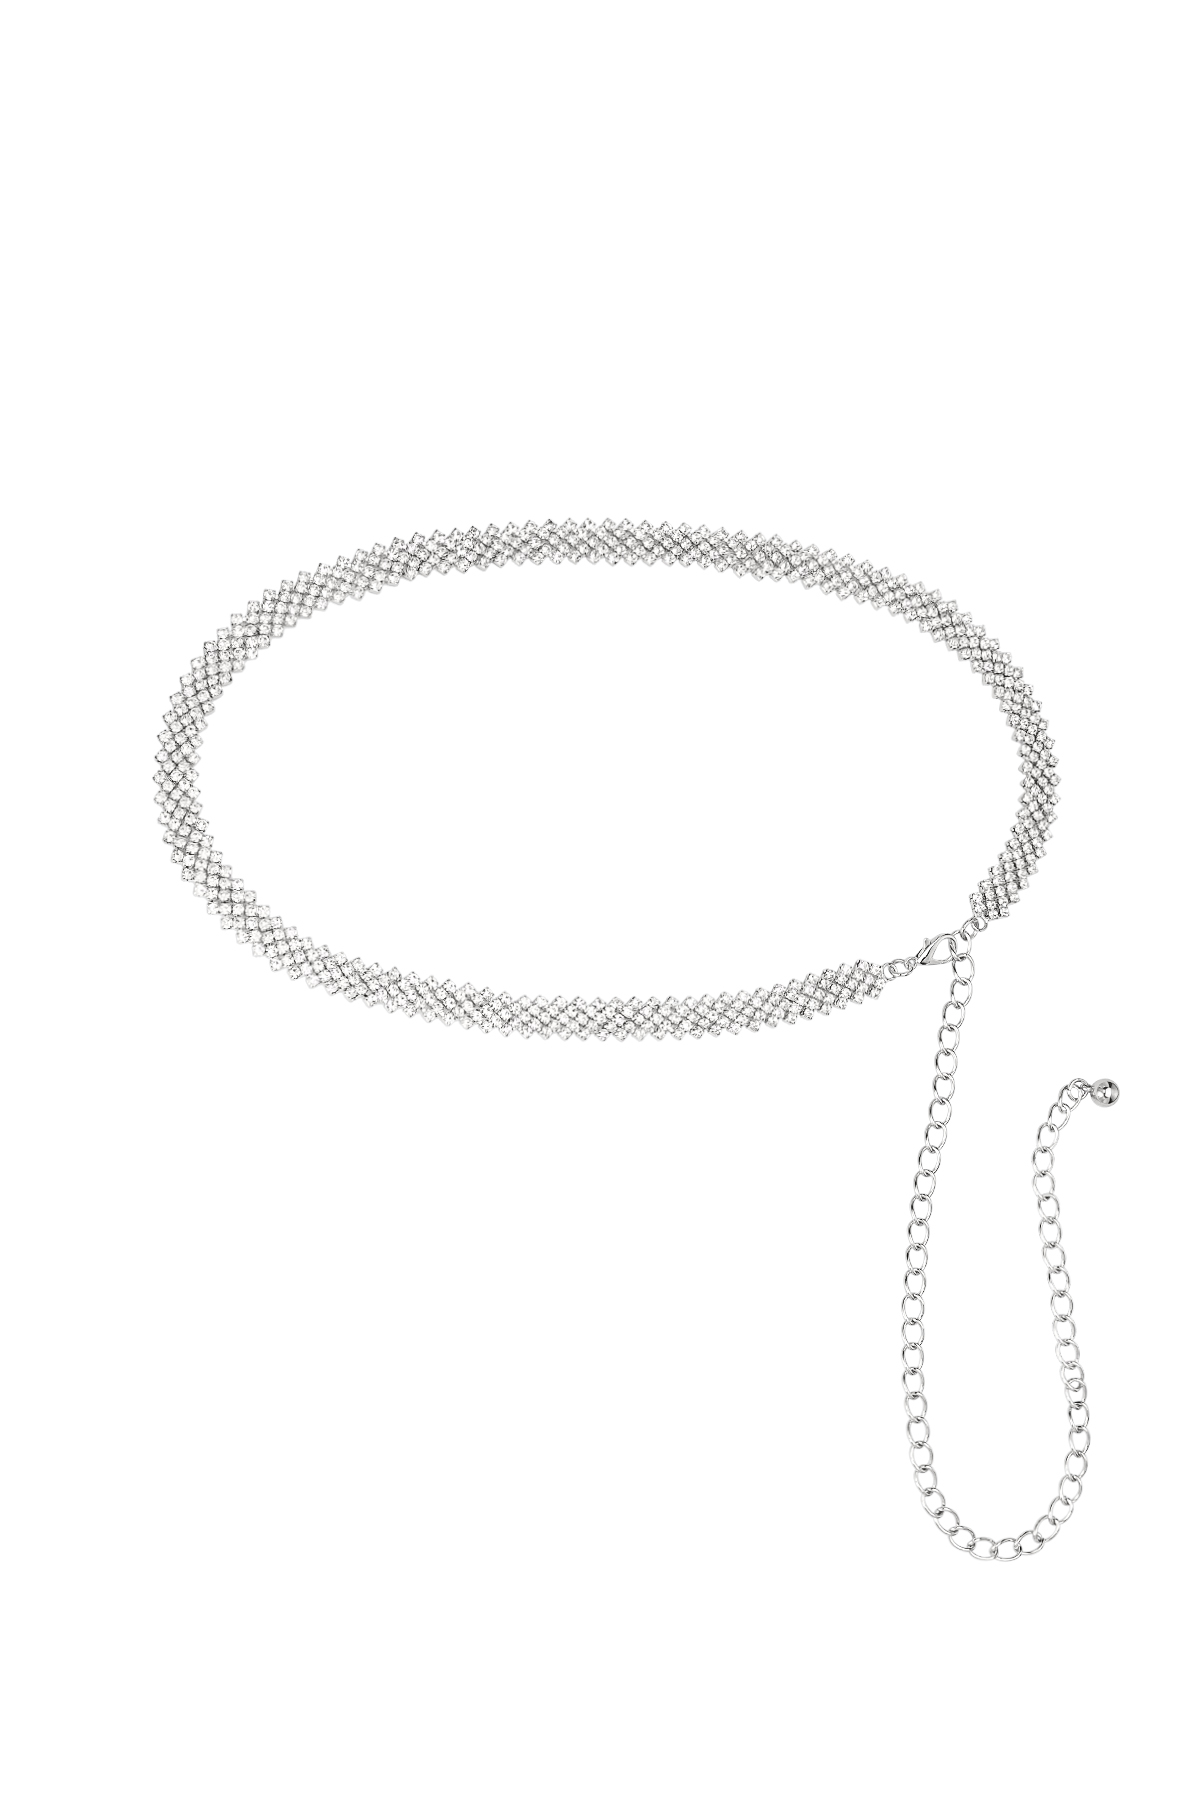 Belly chain motif - silver Metal